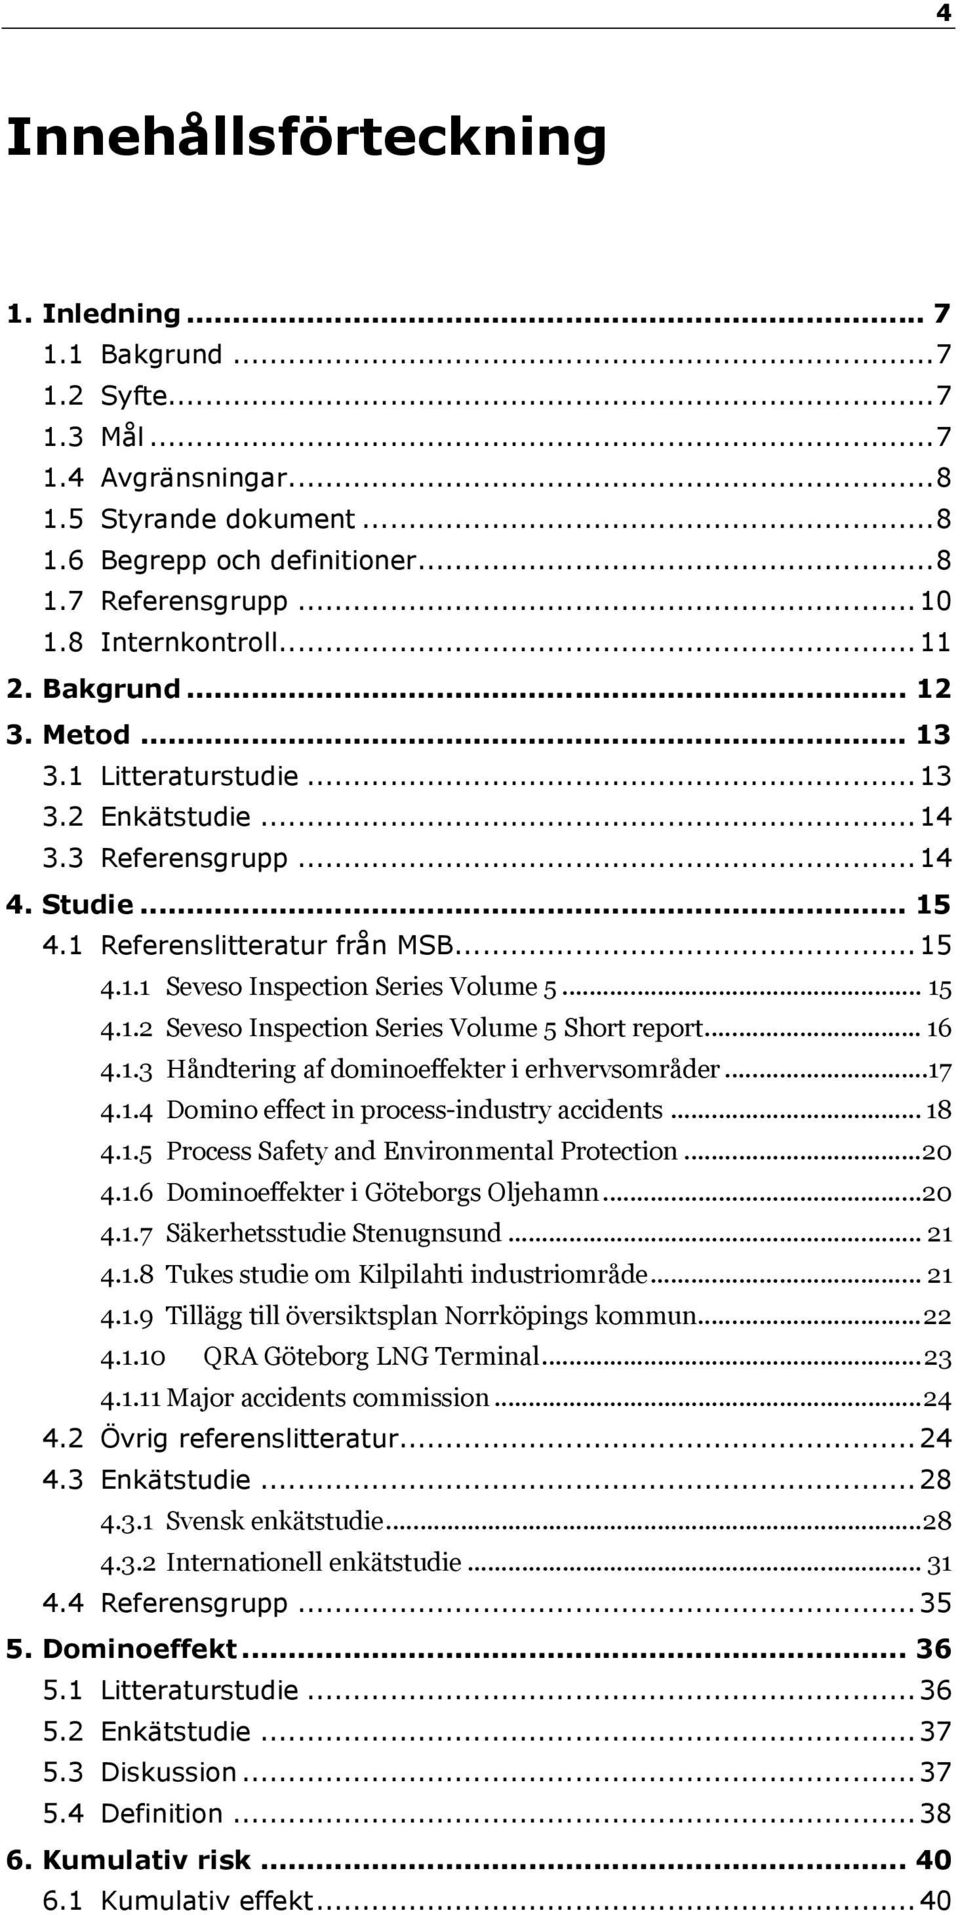 .. 15 4.1.2 Seveso Inspection Series Volume 5 Short report... 16 4.1.3 Håndtering af dominoeffekter i erhvervsområder...17 4.1.4 Domino effect in process-industry accidents... 18 4.1.5 Process Safety and Environmental Protection.